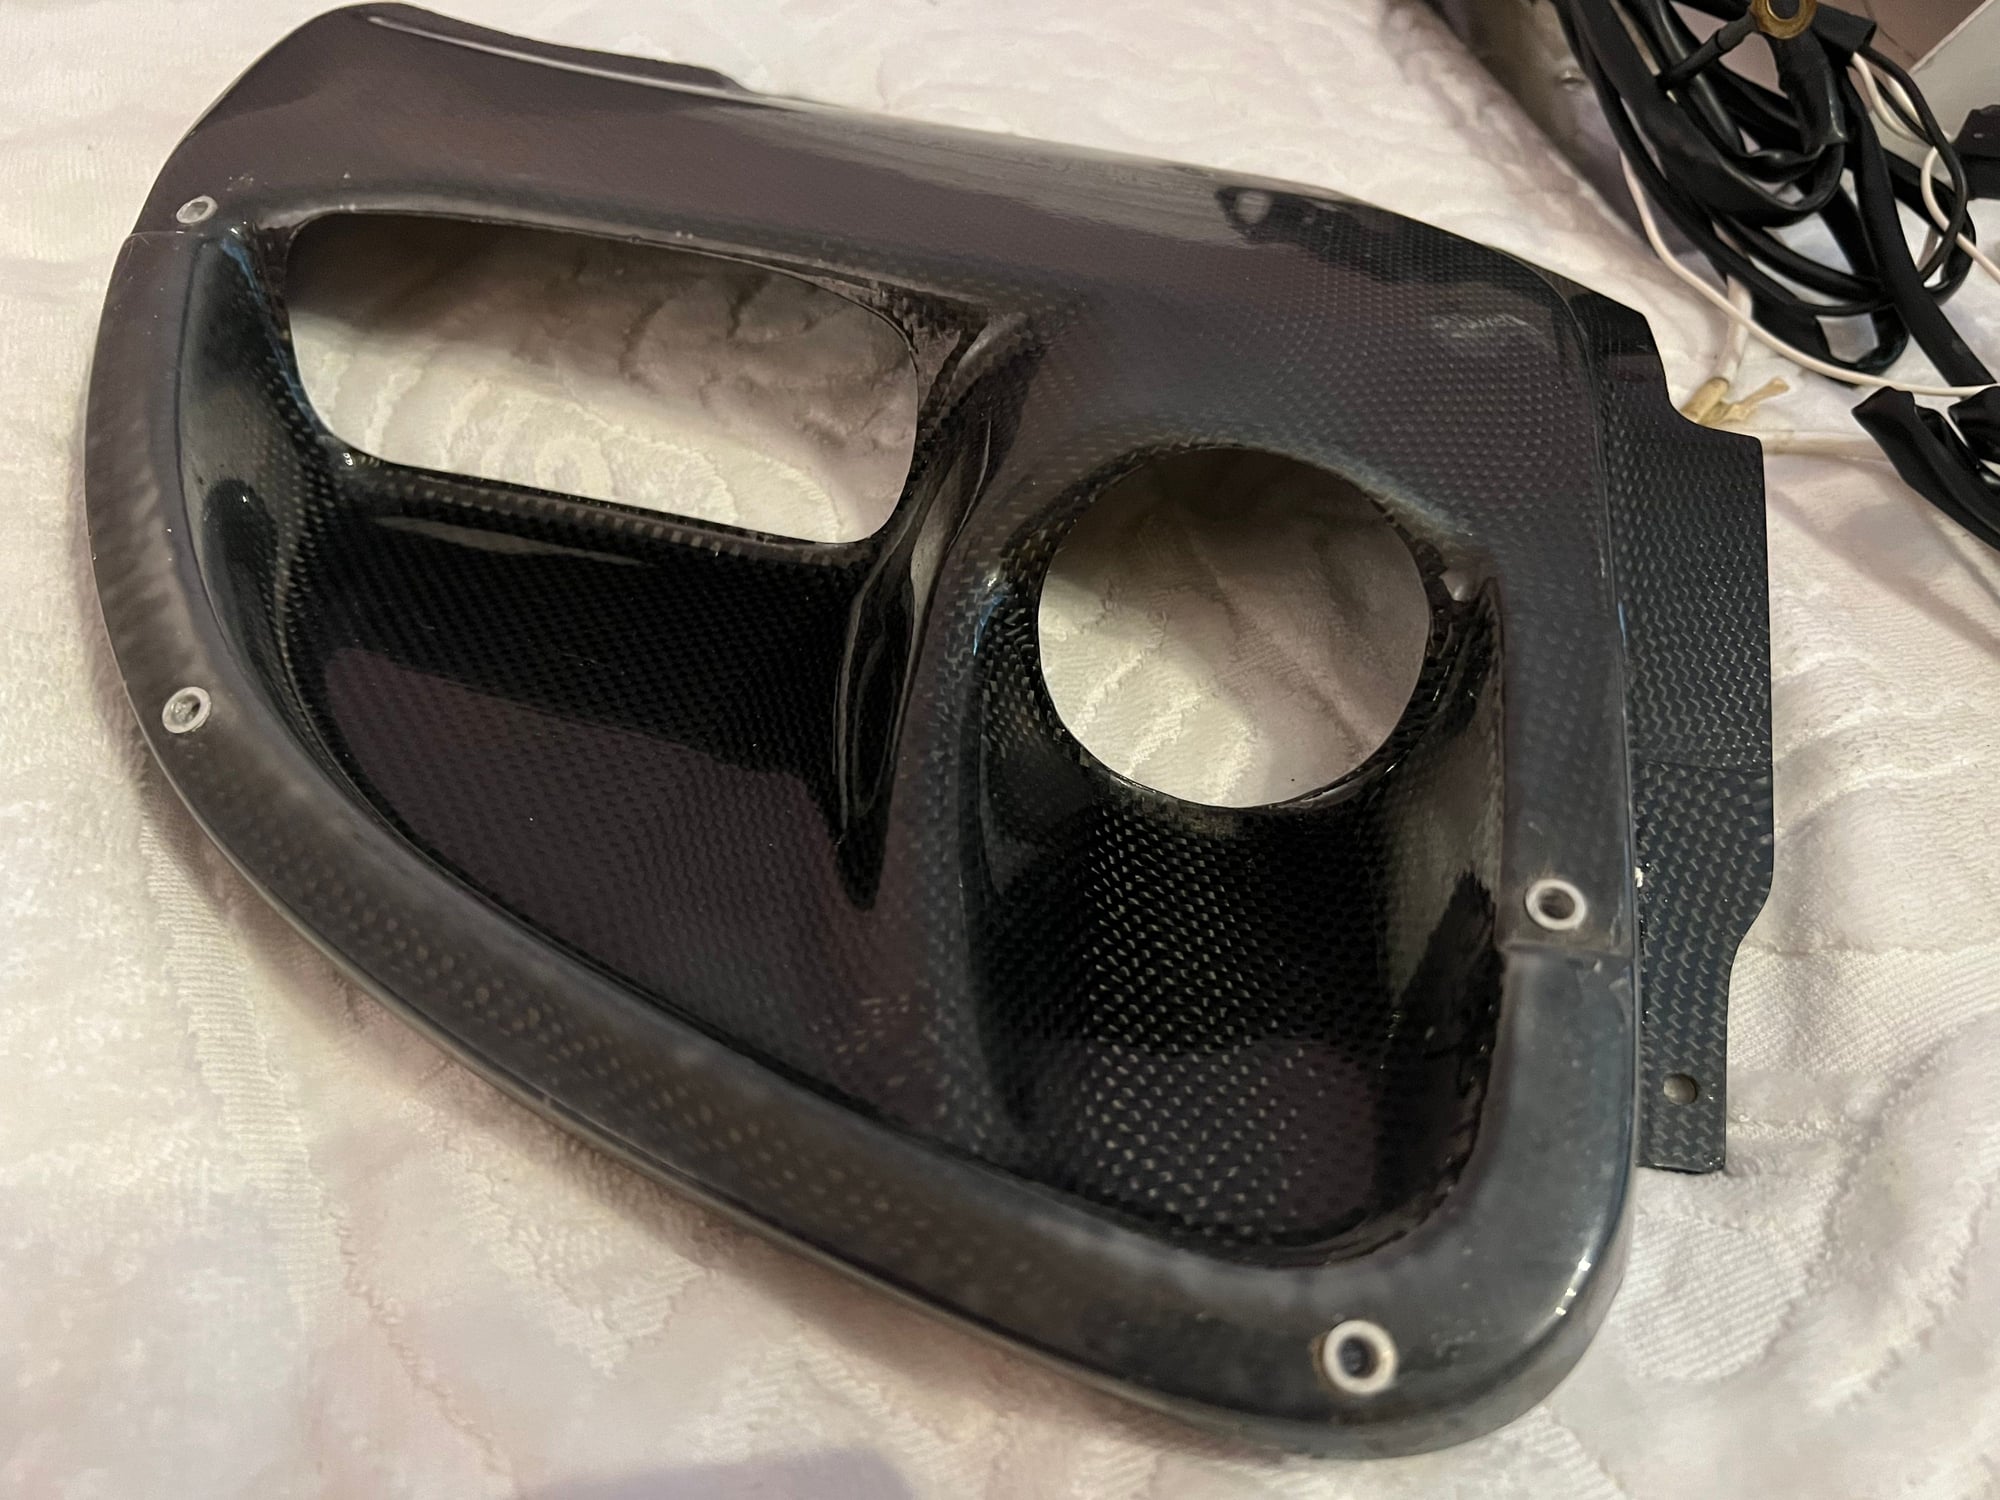 Exterior Body Parts - Original R-Magic H3 Headlight Kit w/ Carbon Bases - Used - 1992 to 2002 Mazda RX-7 - London HA27DY, United Kingdom